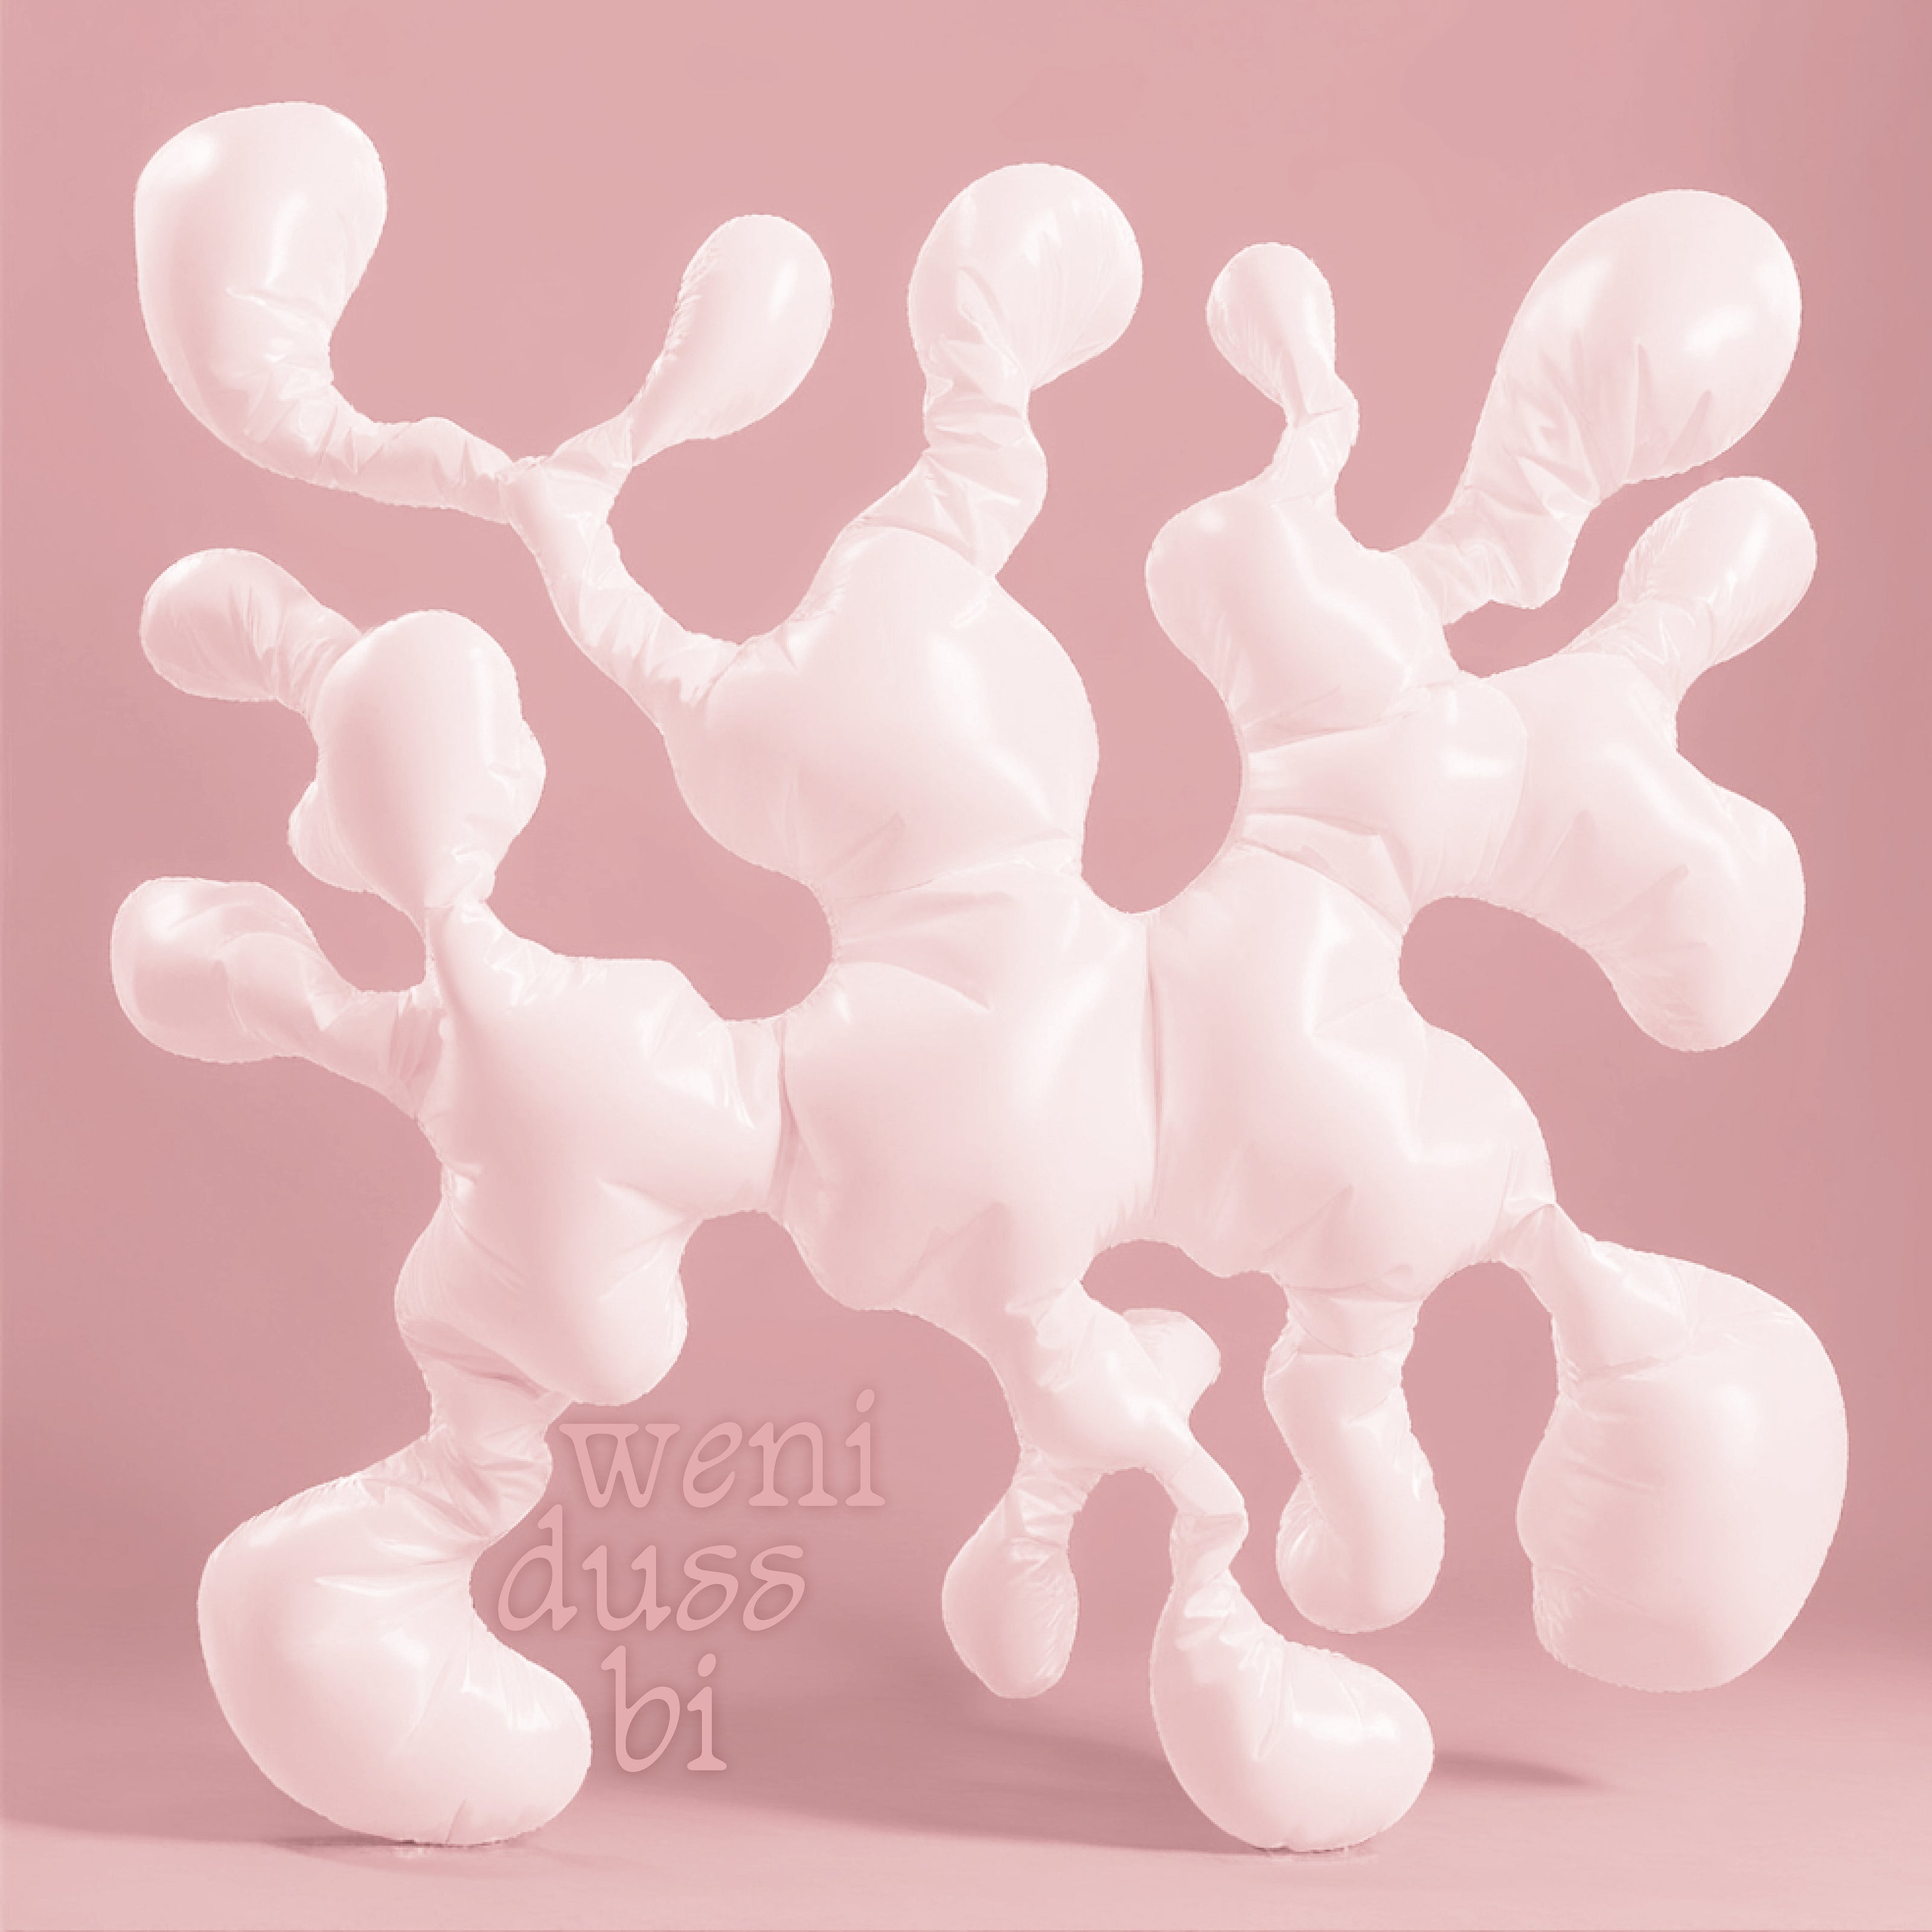 Skulpturale, rosa Zellstrukturen auf Paulis ruhigem Single-Cover